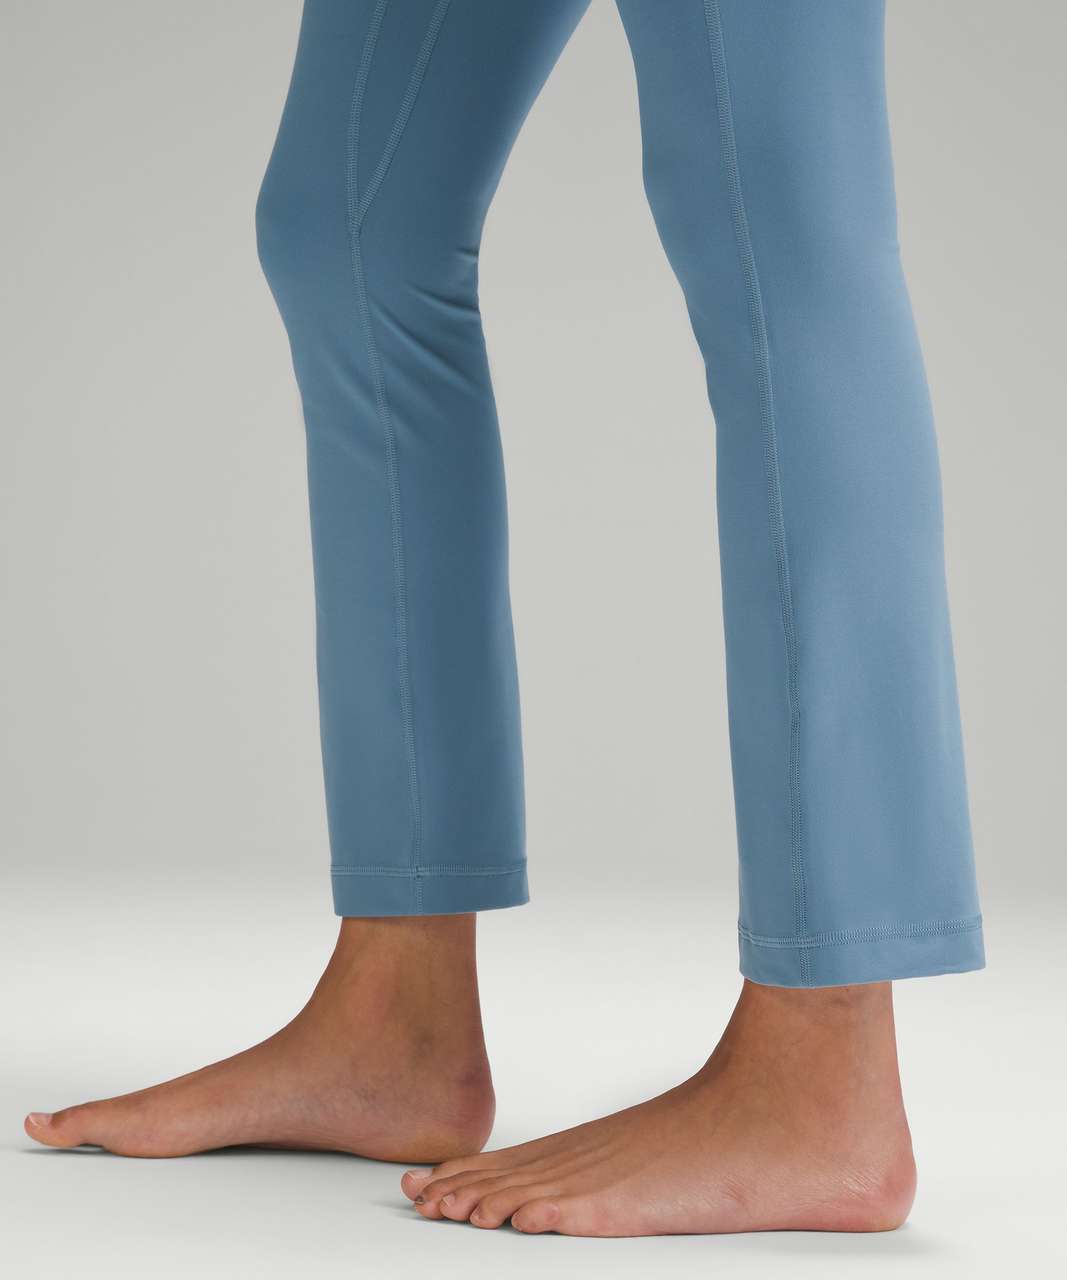 Lululemon Align High-Rise Pant with Pockets 28 - Utility Blue